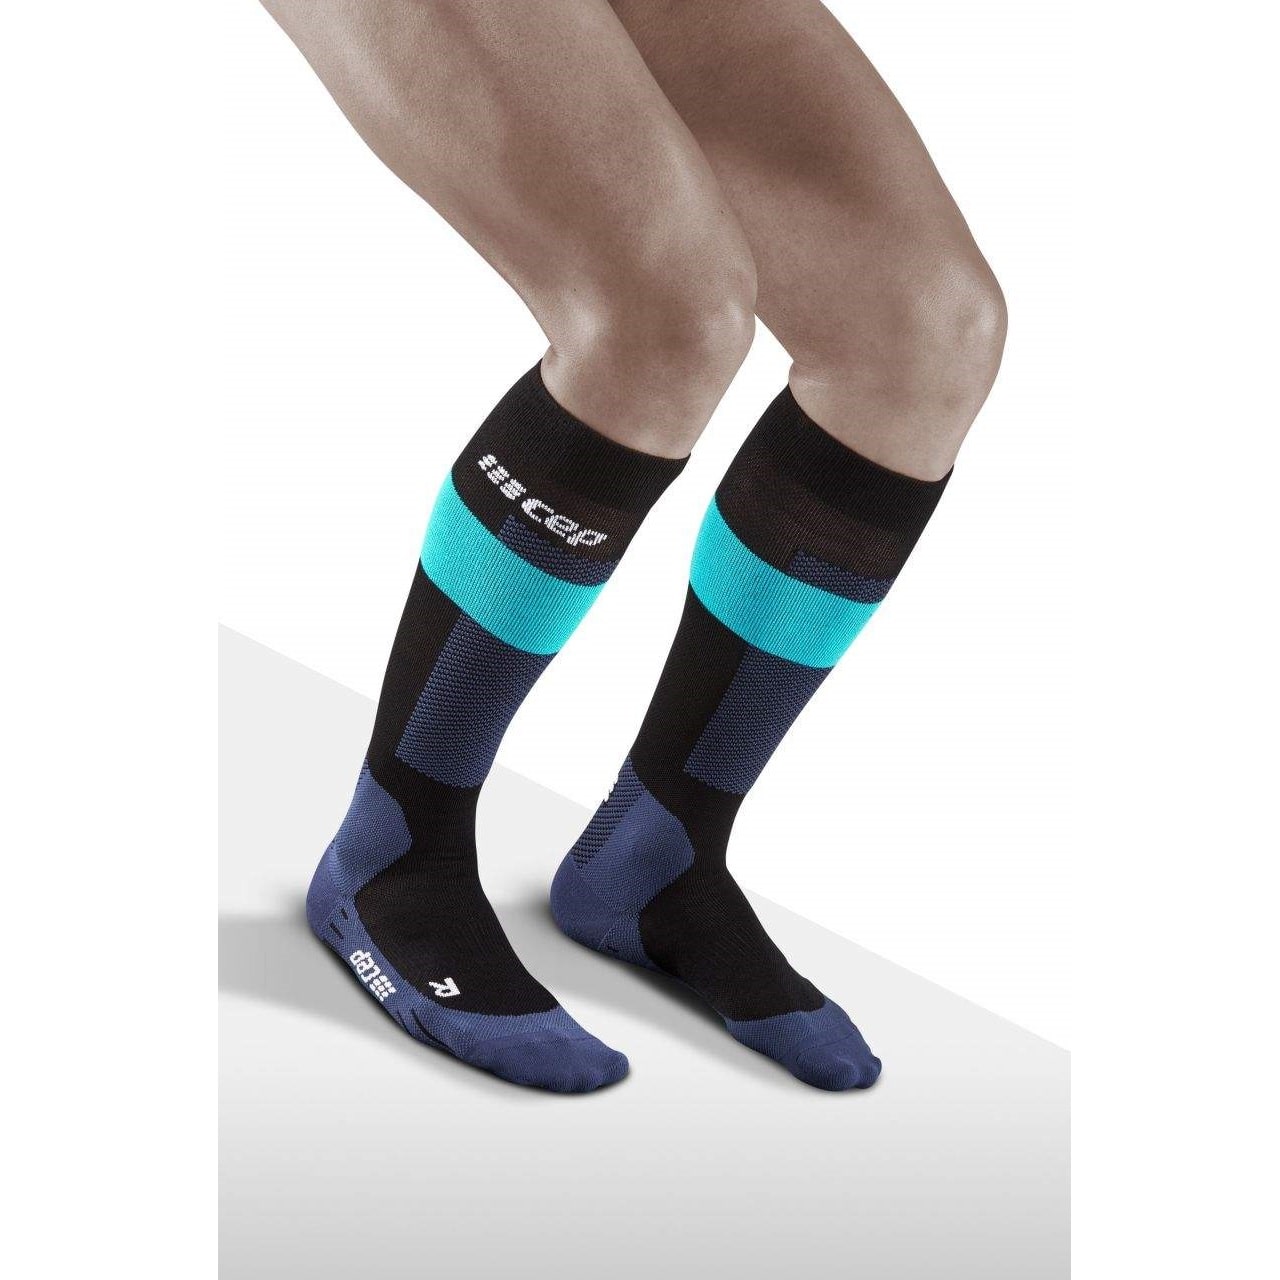 Compression Socks for Women: Comfortable & Durable - AllHeart